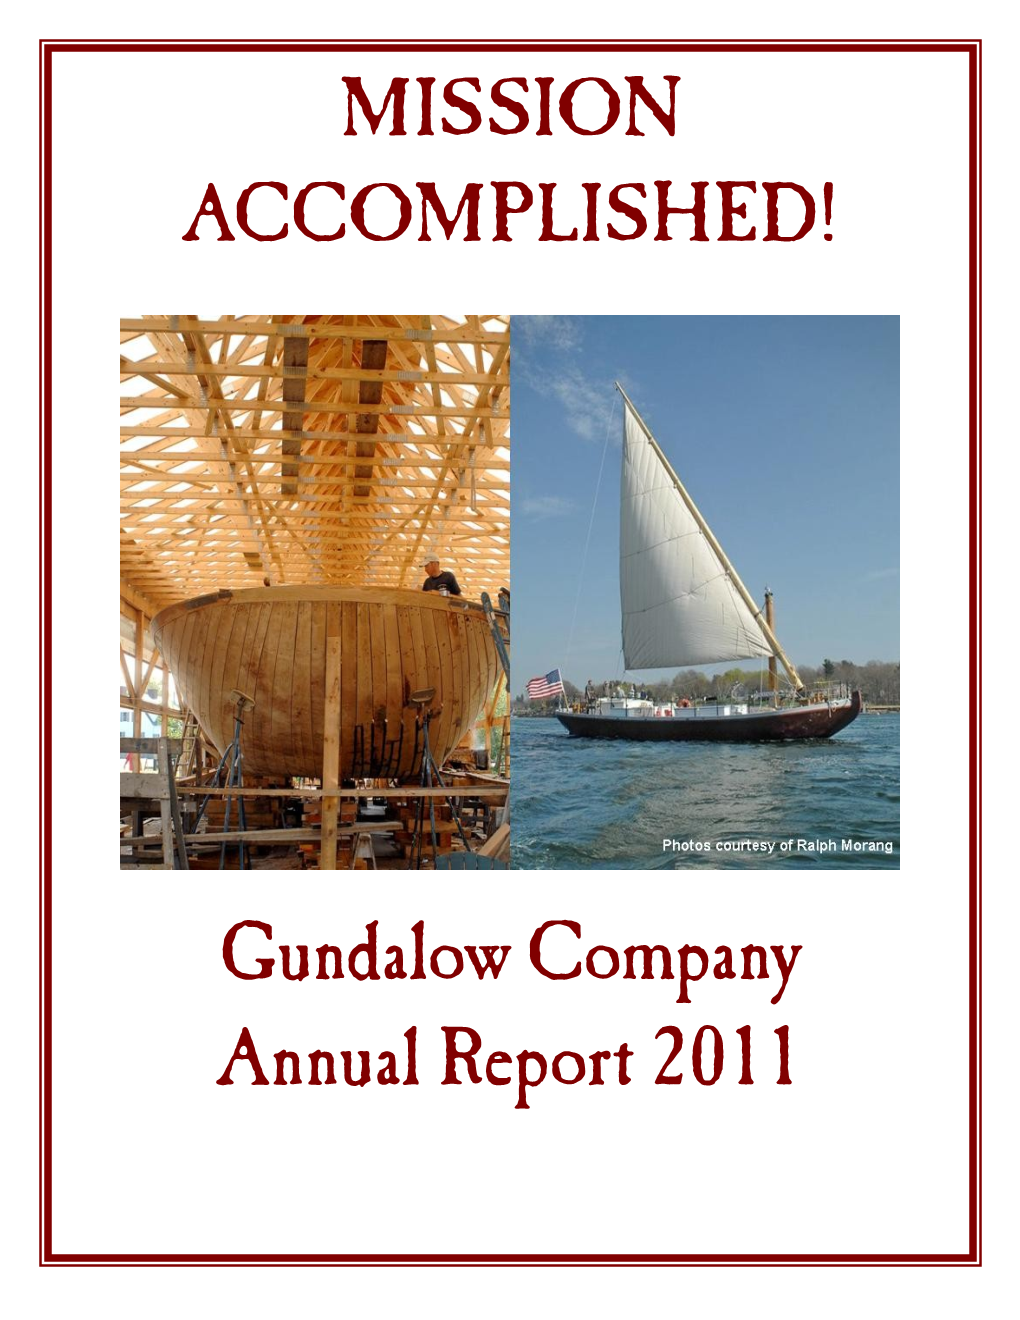 Gundalow Company Annual Report 2011